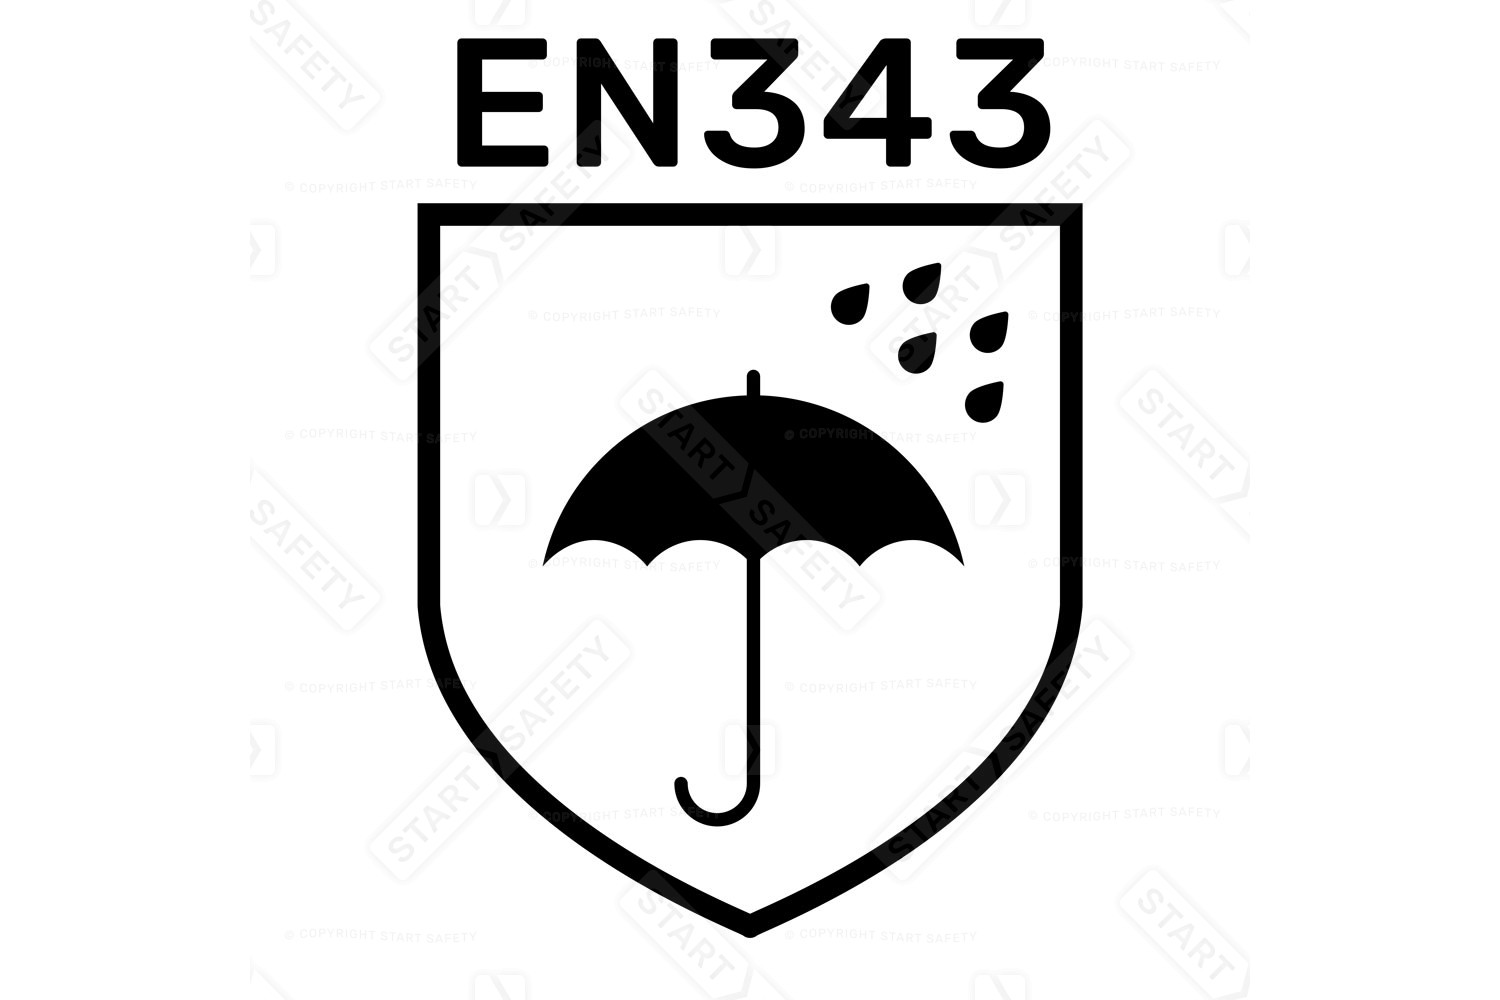 EN343 Water Resistance Standard